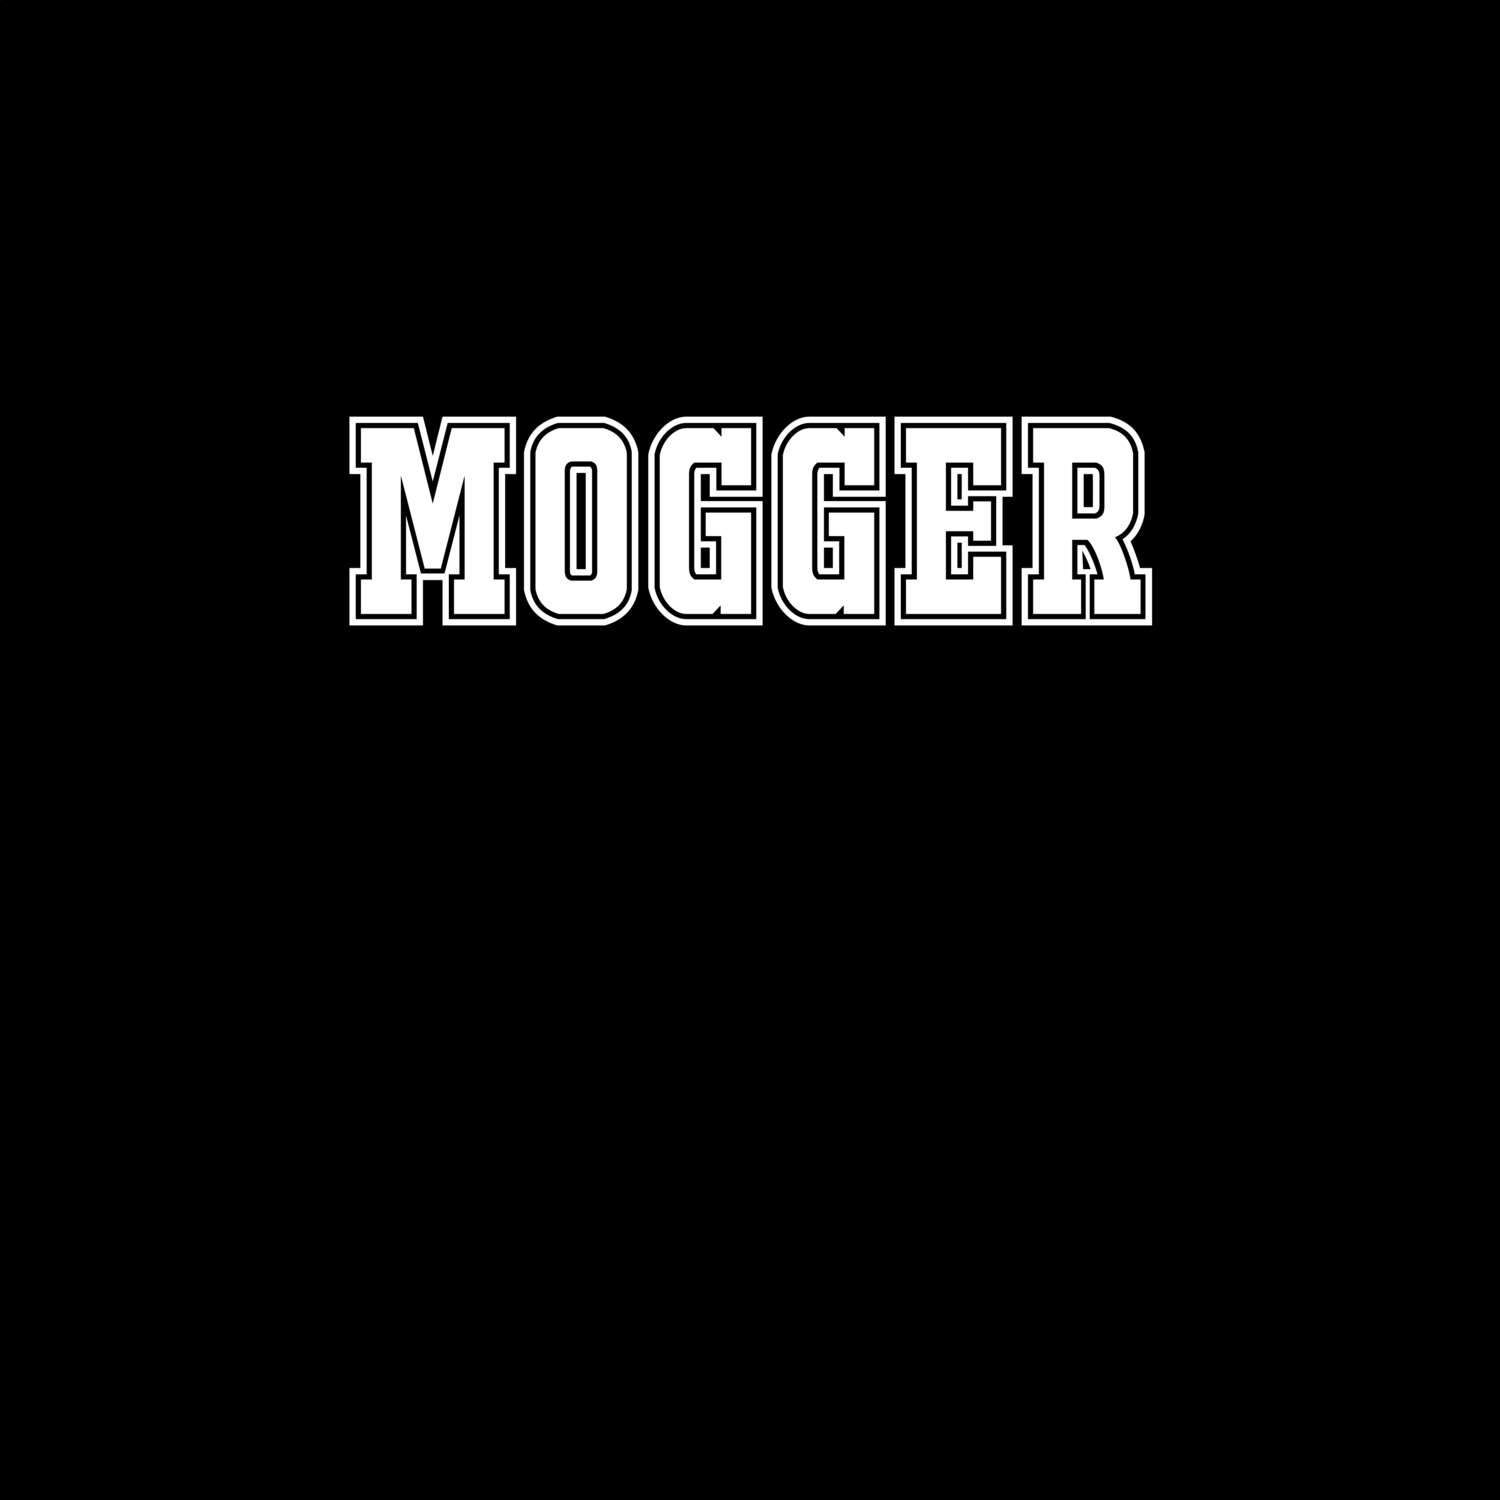 Mogger T-Shirt »Classic«